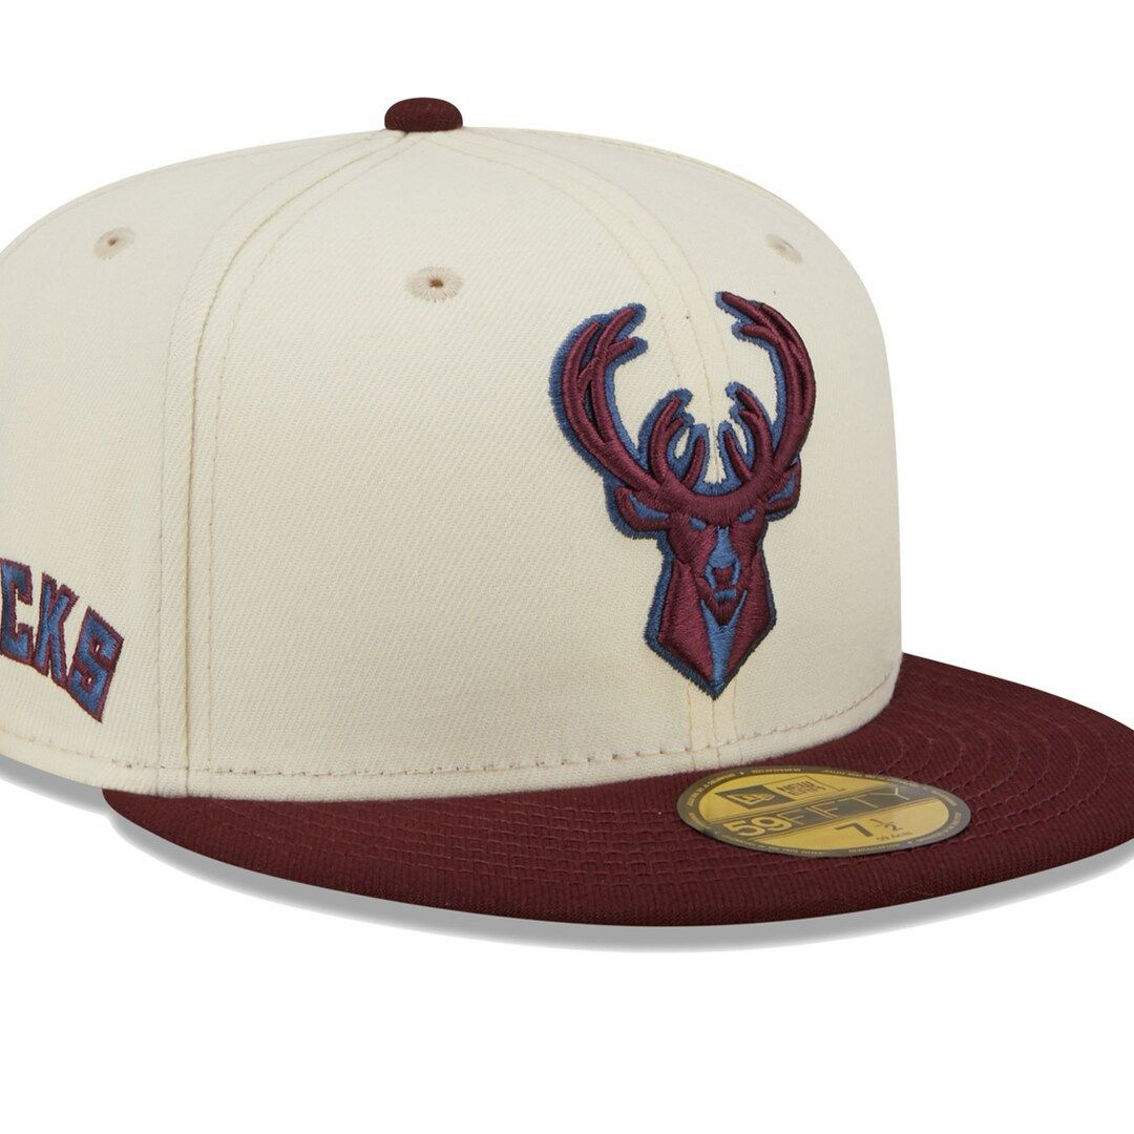 New Era Milwaukee Bucks Outdoor 59Fifty Fitted Hat